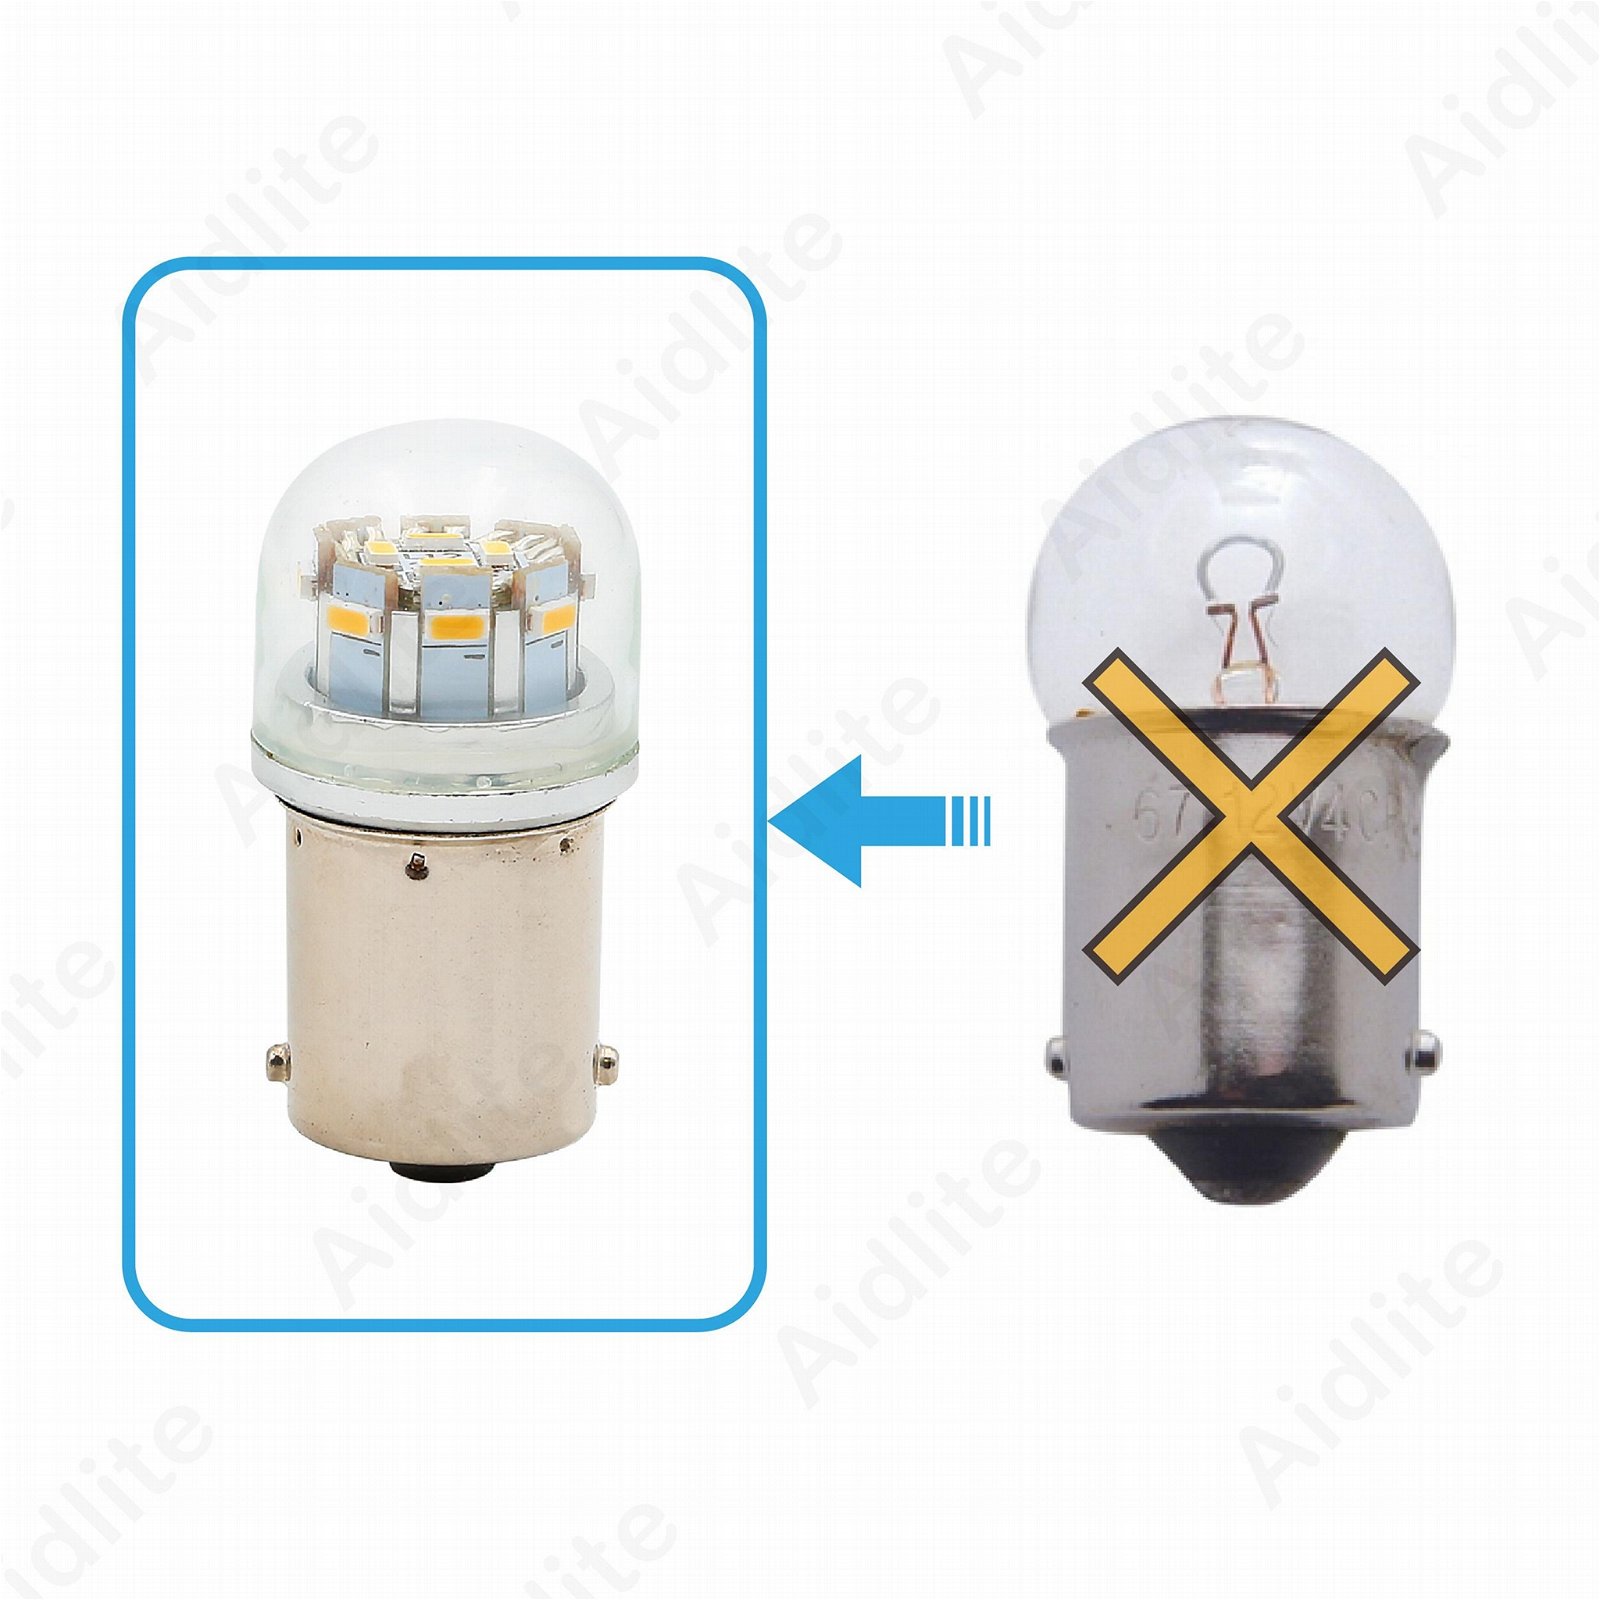 67 LED Bulb w/ Stock Cover -12 LED Tower - BA15S Indicator 5